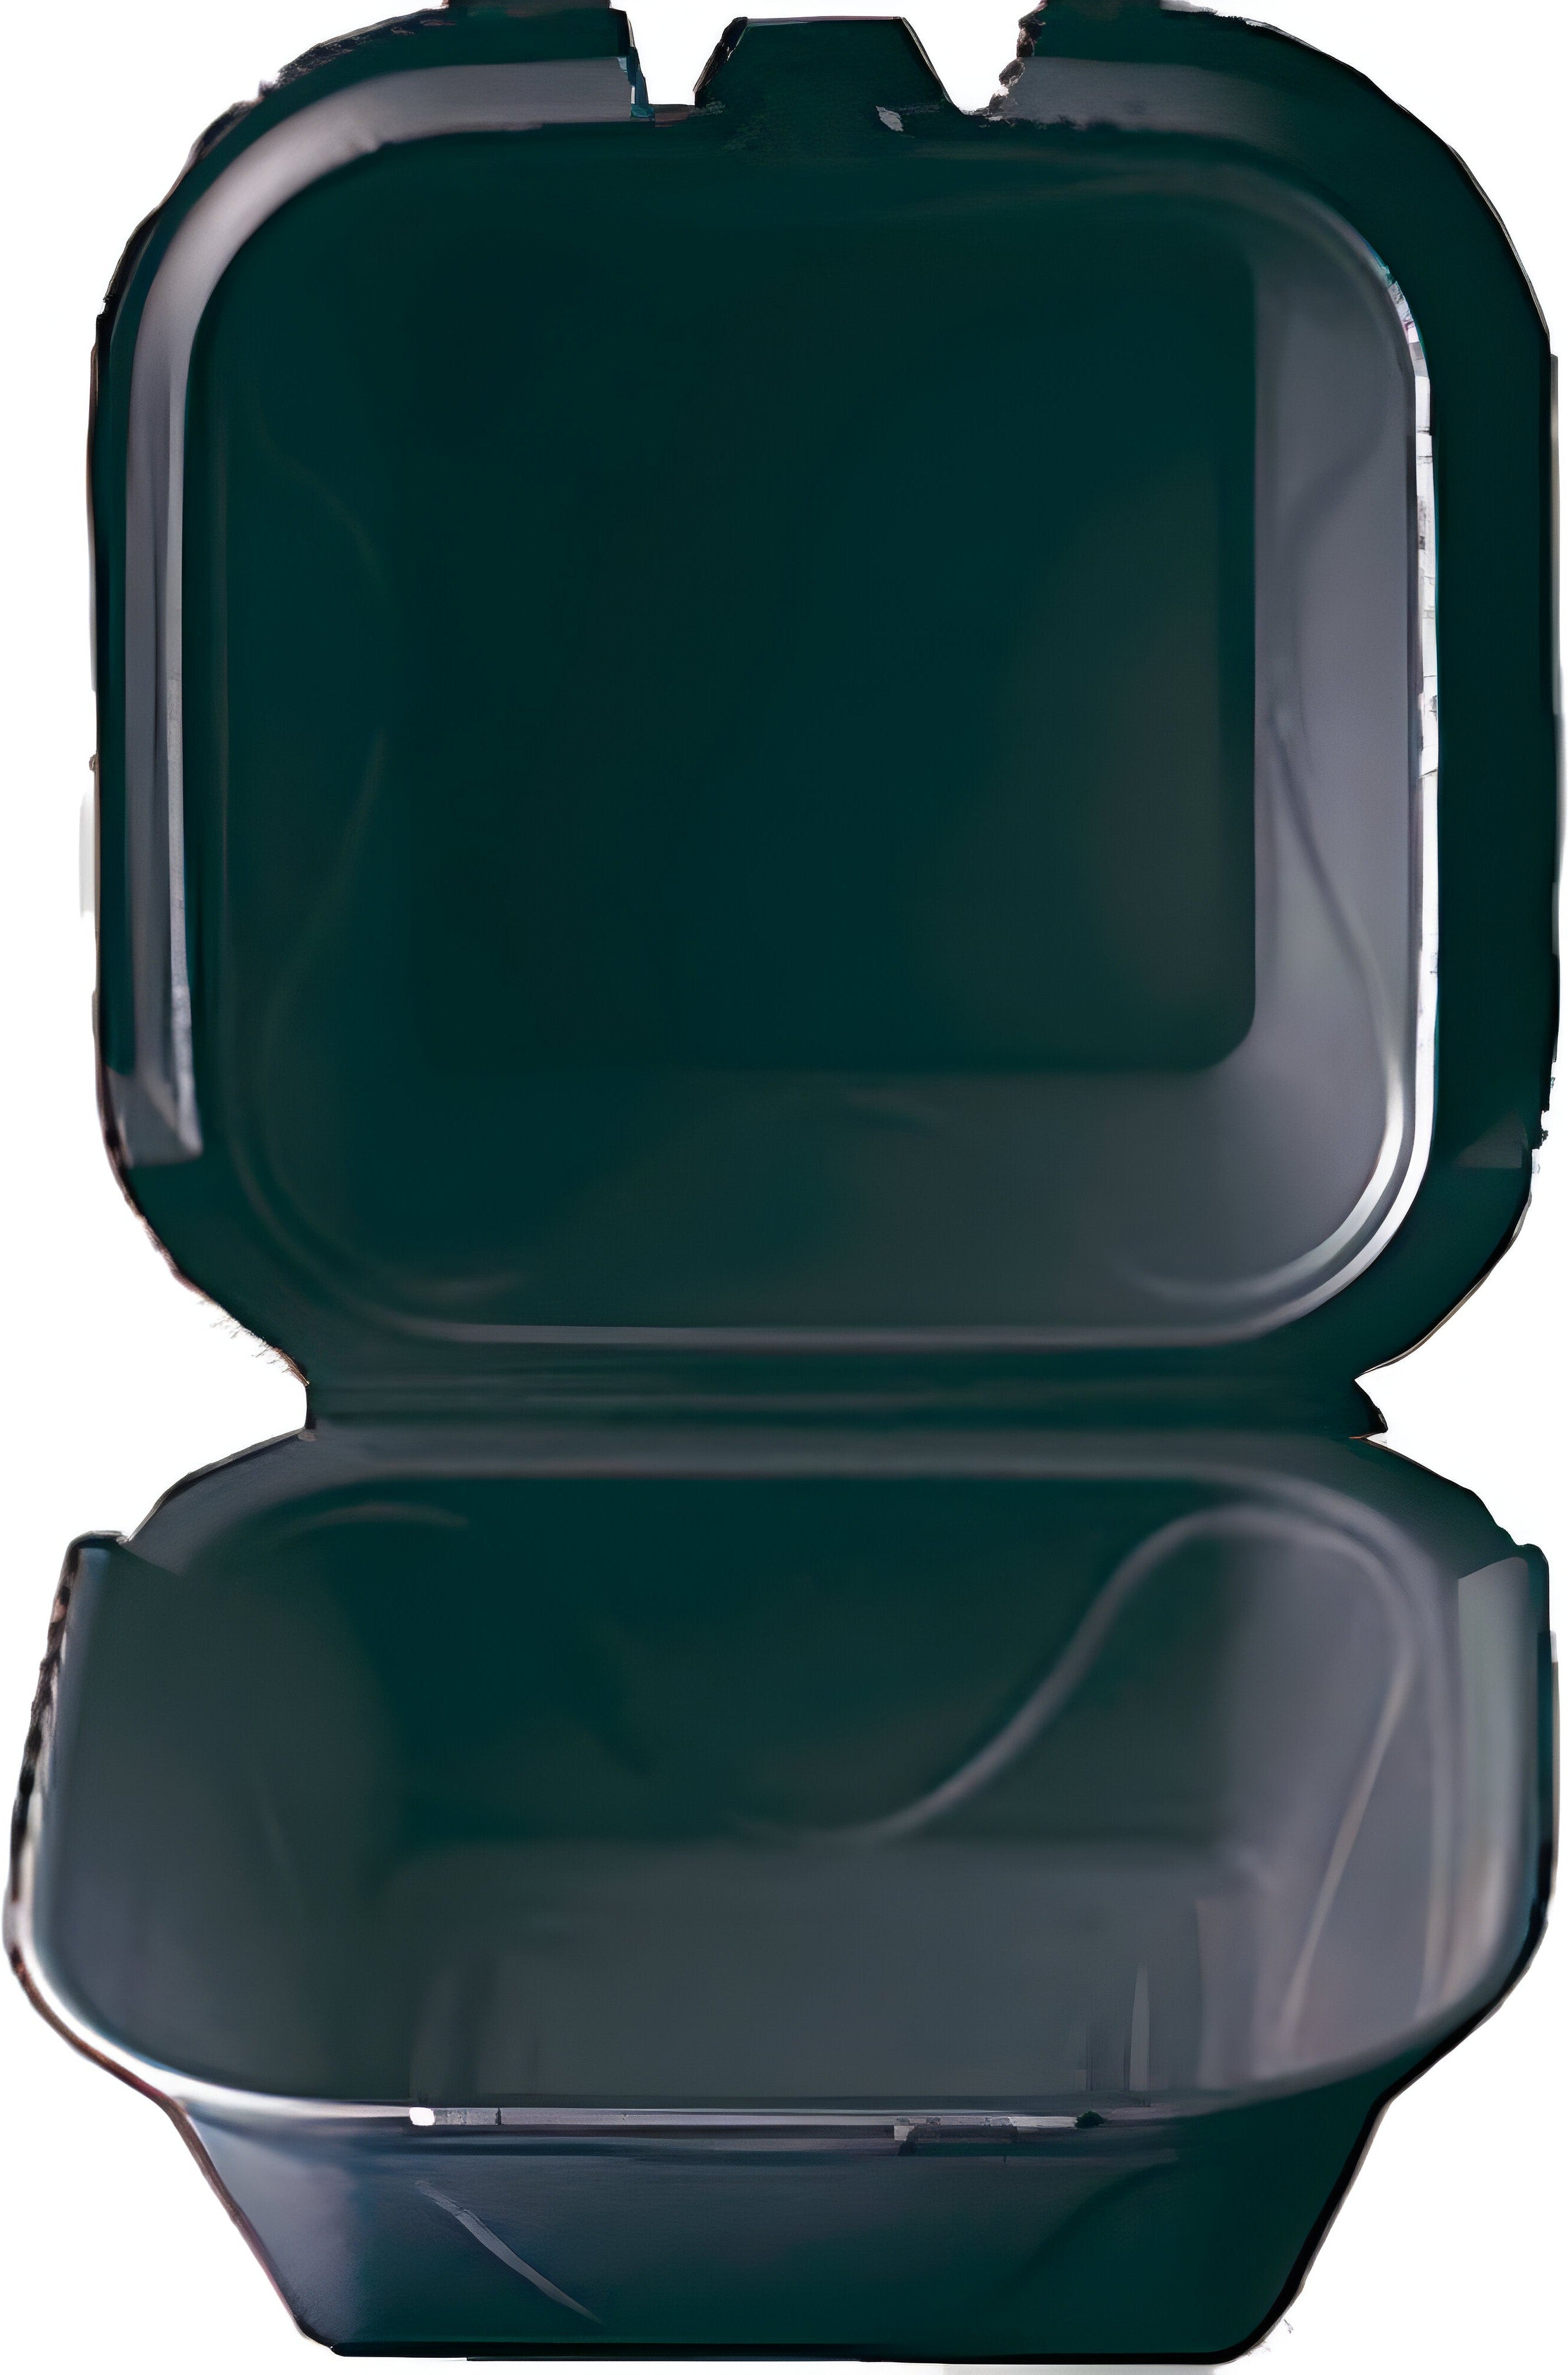 Darnel - 5.125" x 5.25" x 2.75" Black Small Foam Sandwich Hinged Container, 500/Cs - DU402199